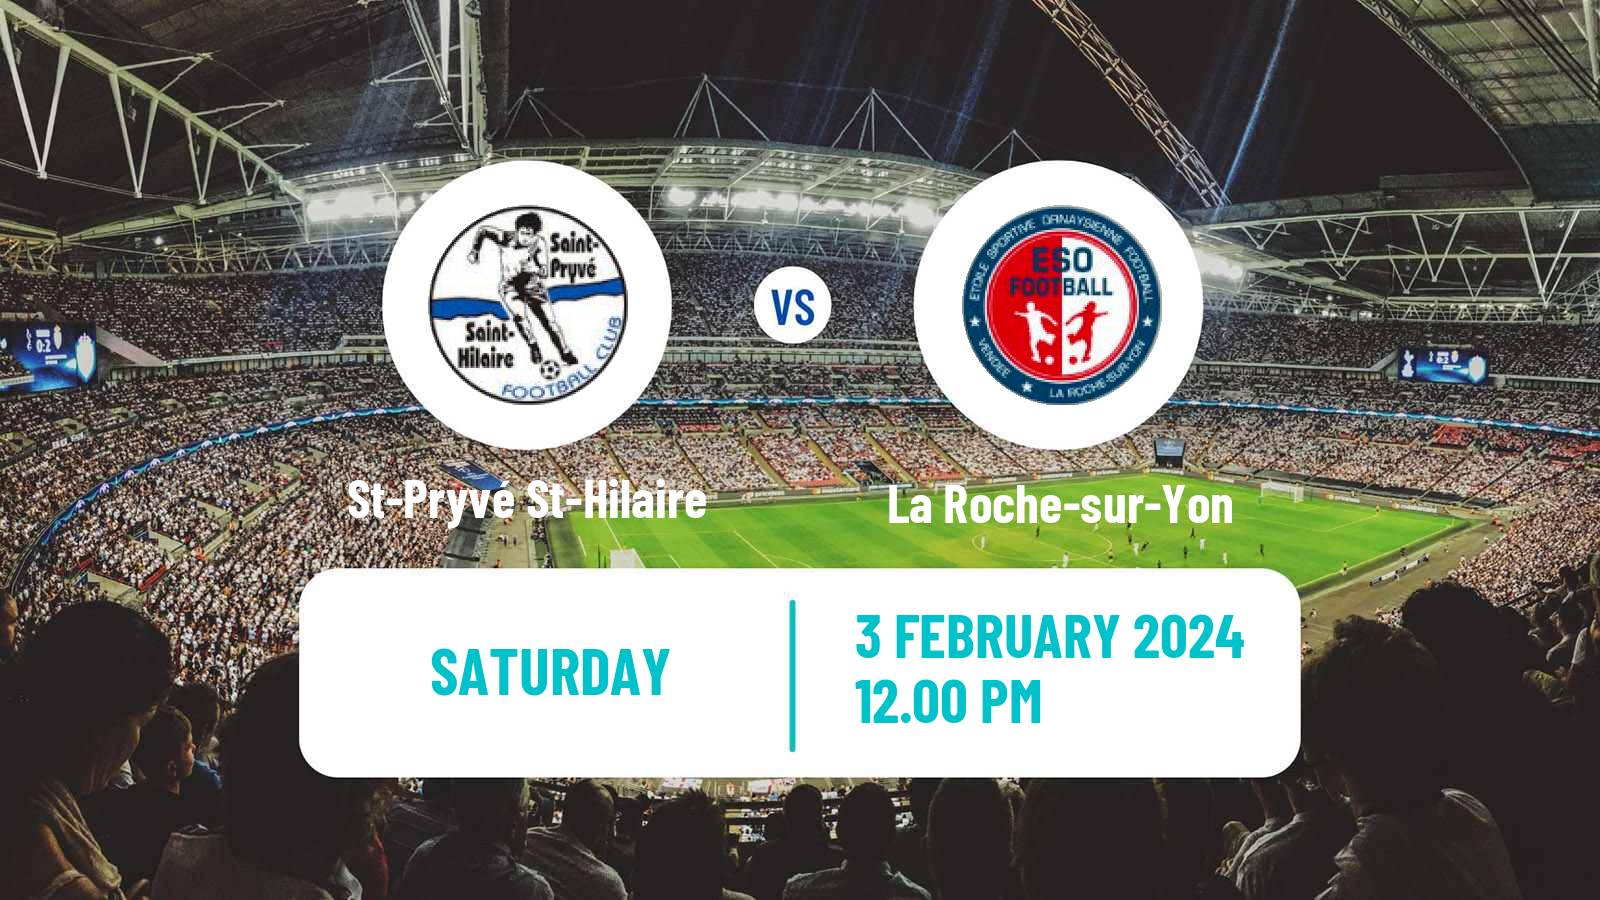 Soccer French National 2 - Group B St-Pryvé St-Hilaire - La Roche-sur-Yon